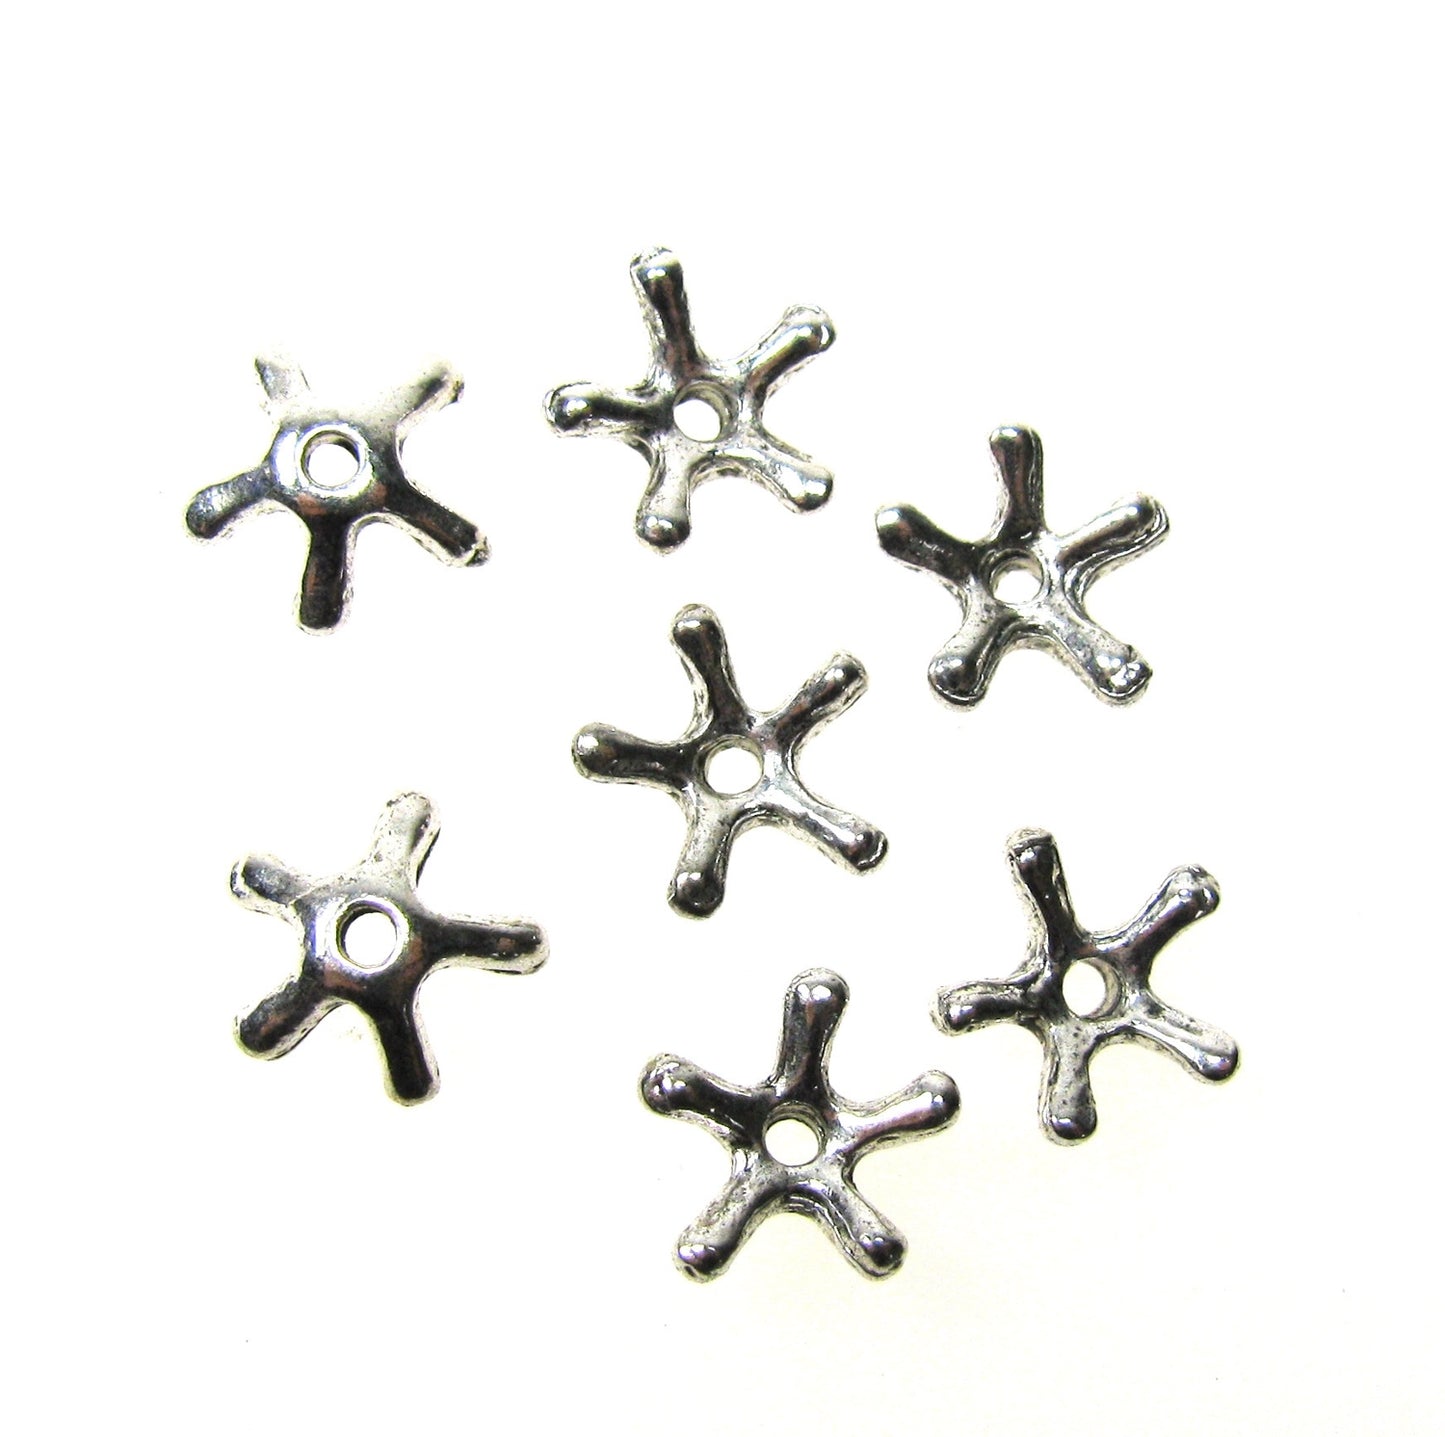 50 Perlkappen Stern  9mm silberfarben, Perlen basteln, strahlenförmig, Endkappen